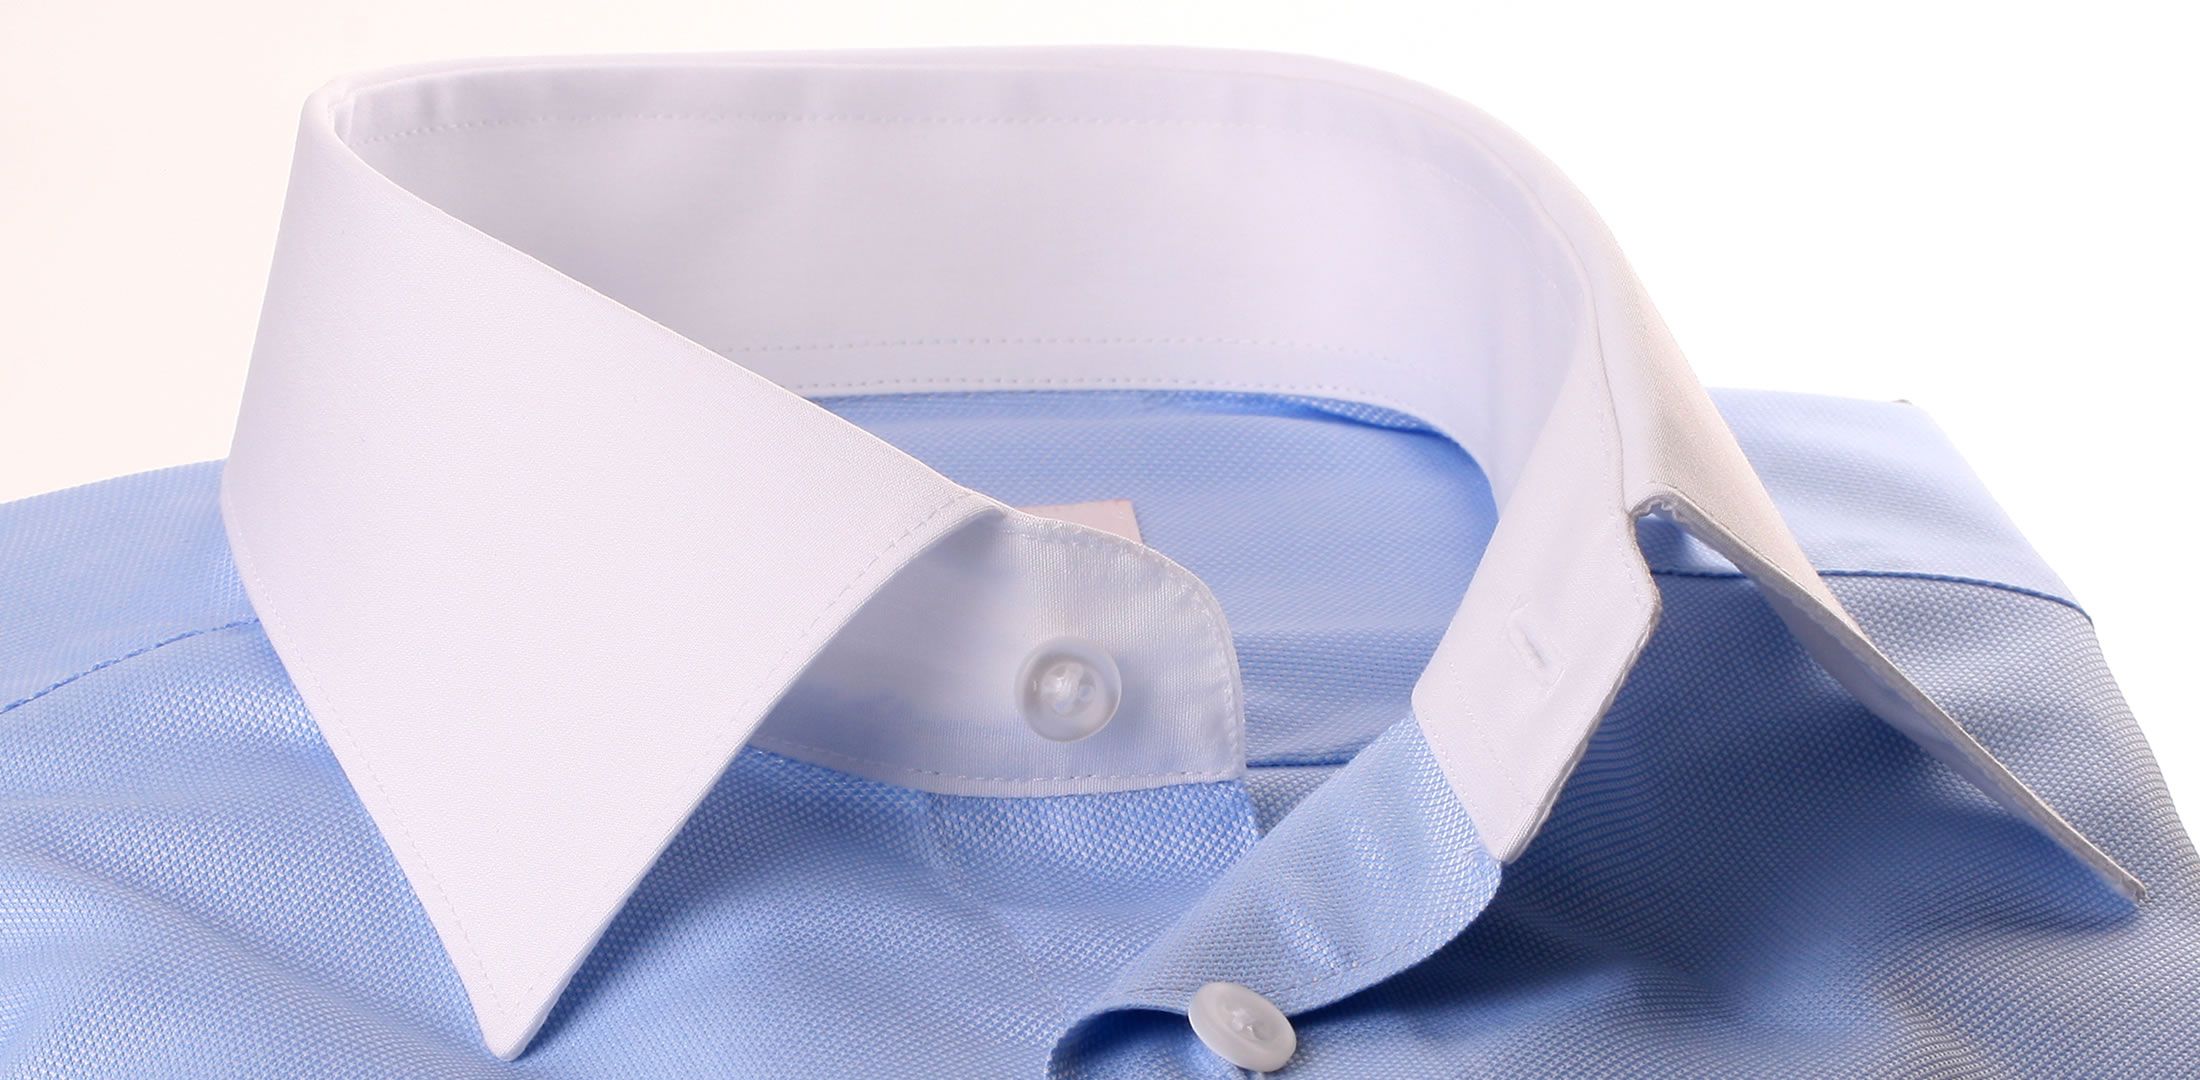 Blauw oxford shirt met witte kraag en manchetten